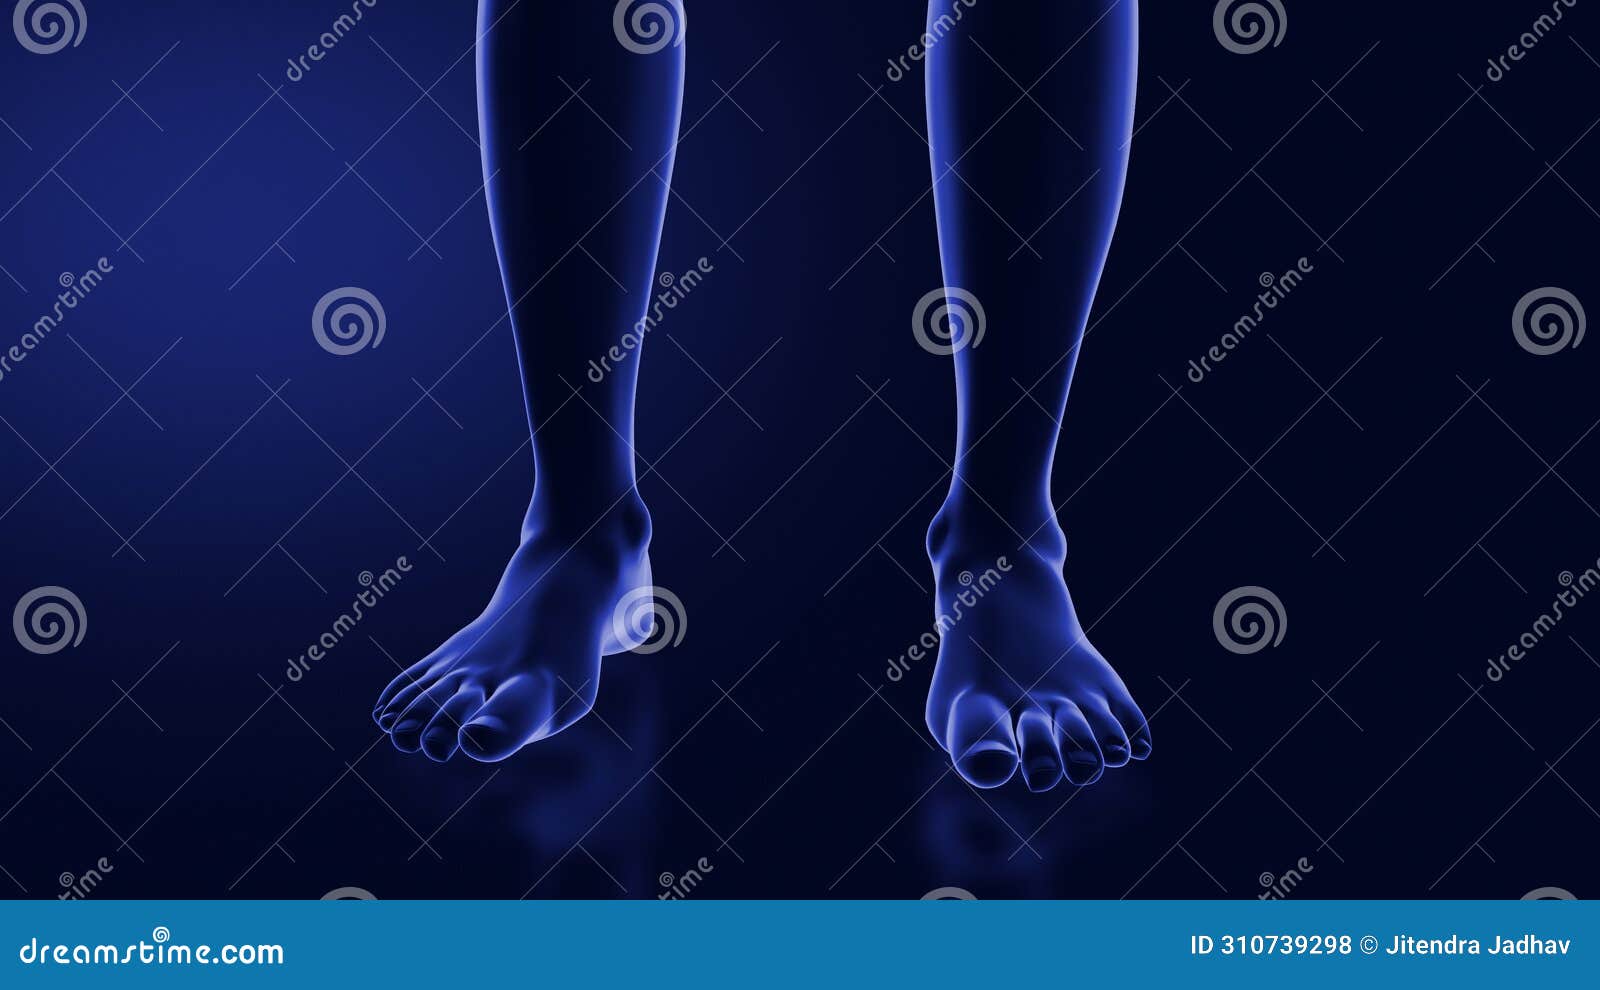 ball of foot pain or metatarsalgia